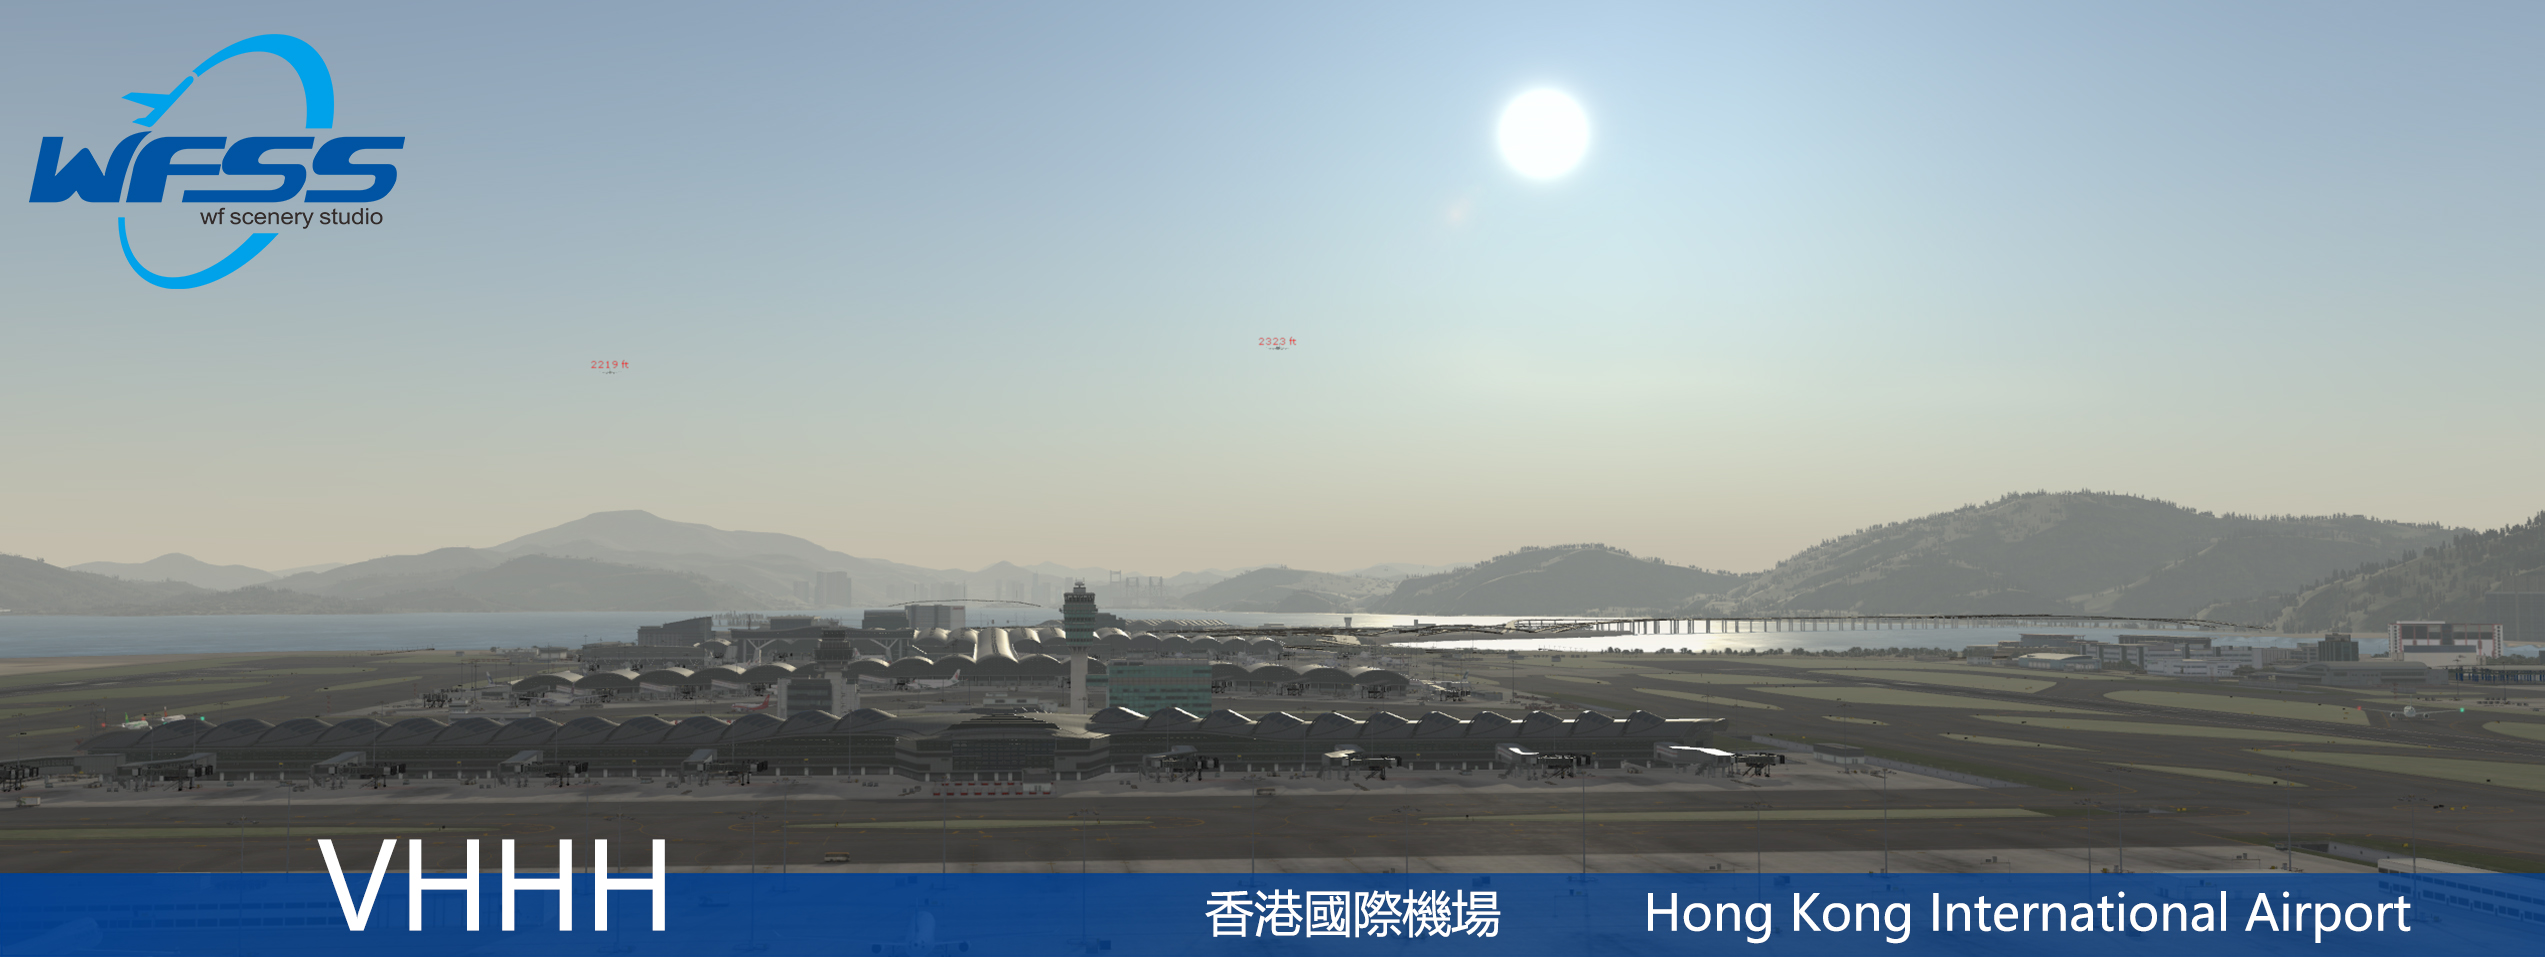 WFSS-香港国际机场发布-5660 